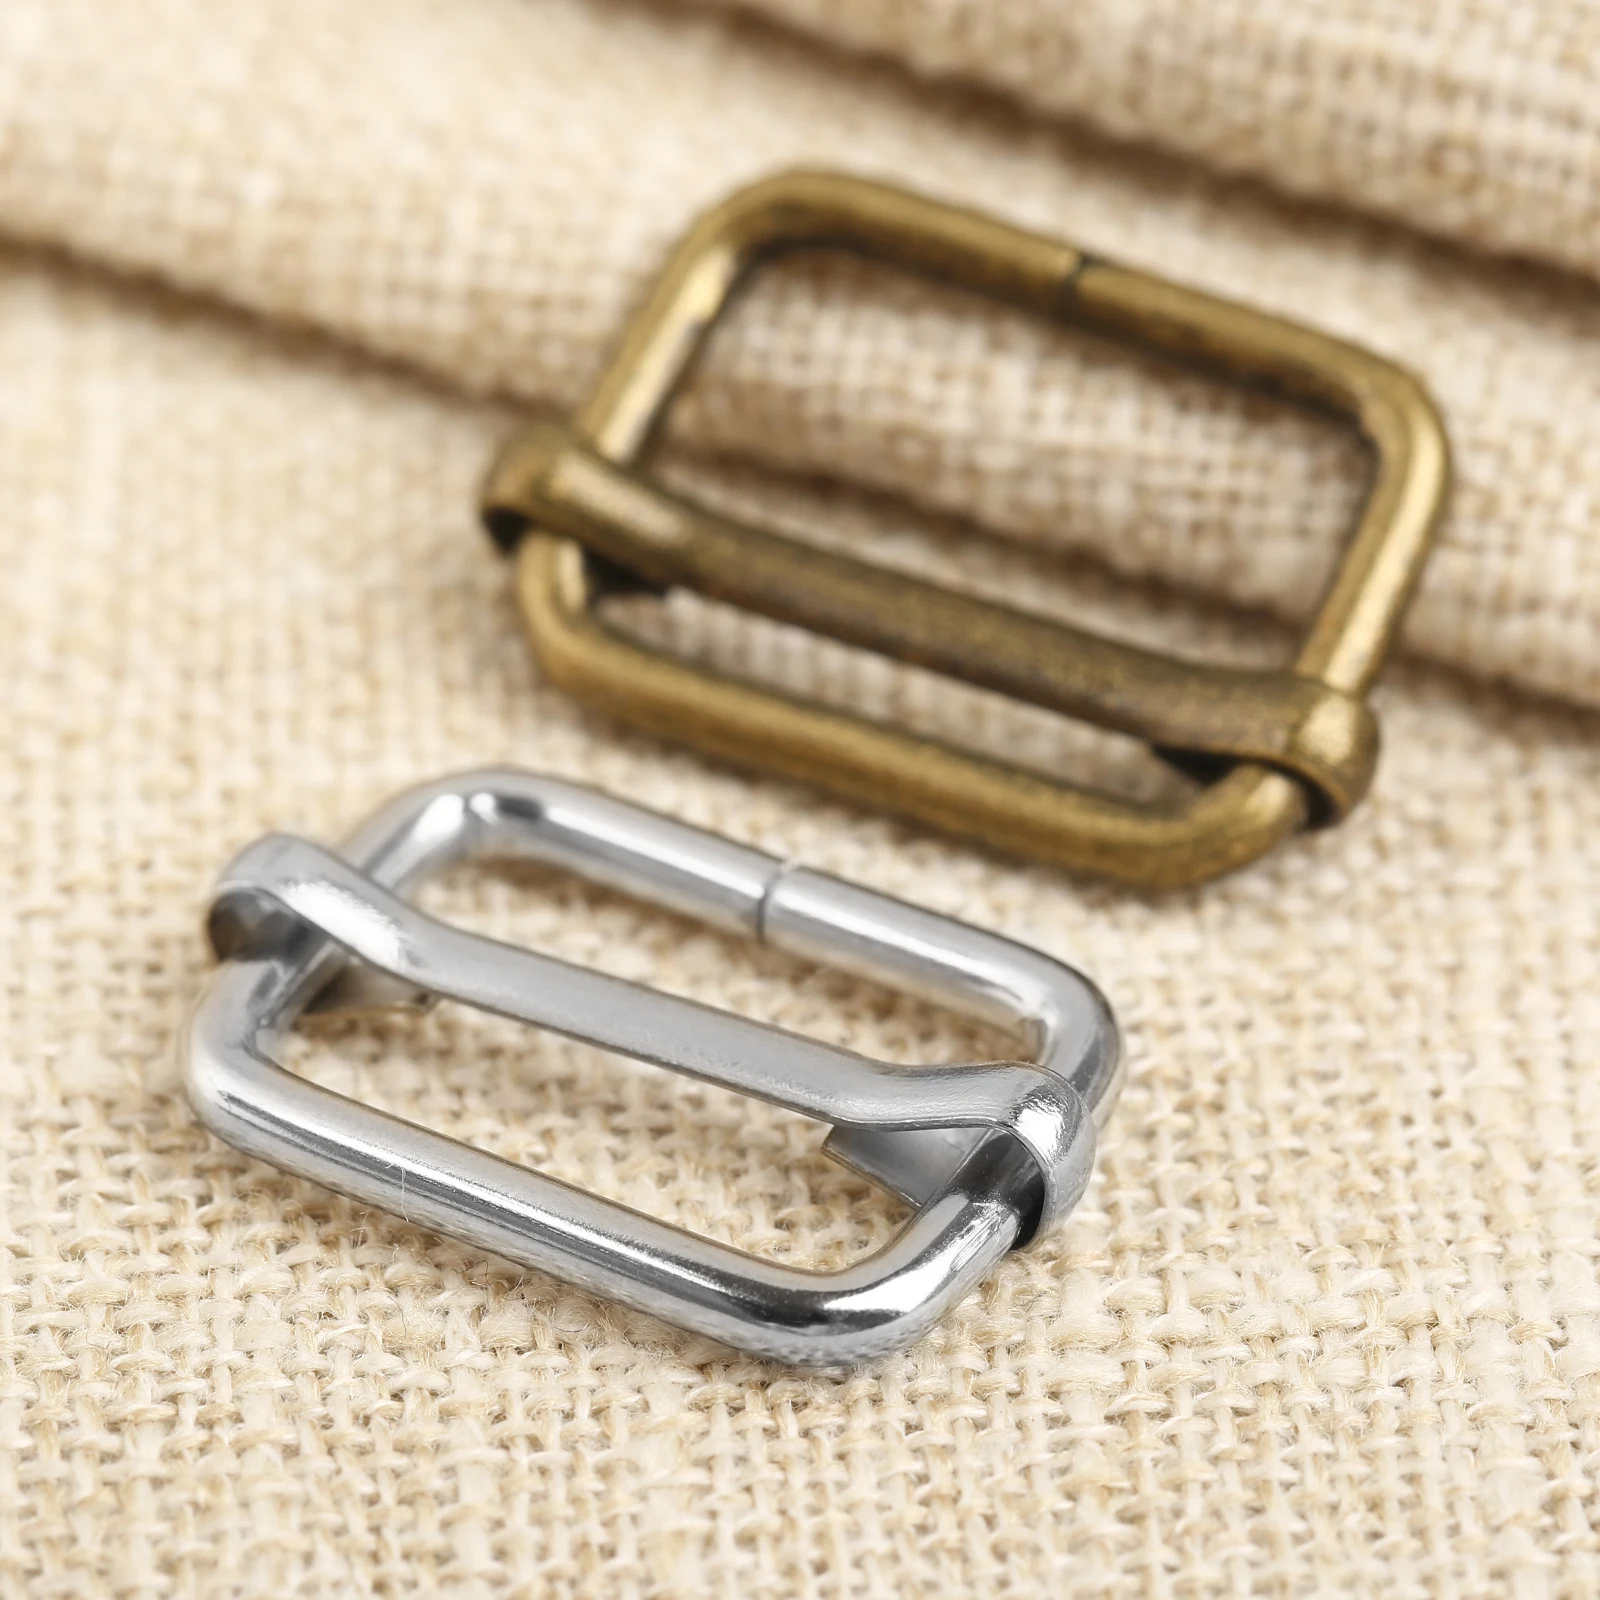 20 Stks/partij Metalen Vierkante Ring Gespen Riem Slider Richter Voor Tassen Garment Lederen Accessoires Diy Handwerken